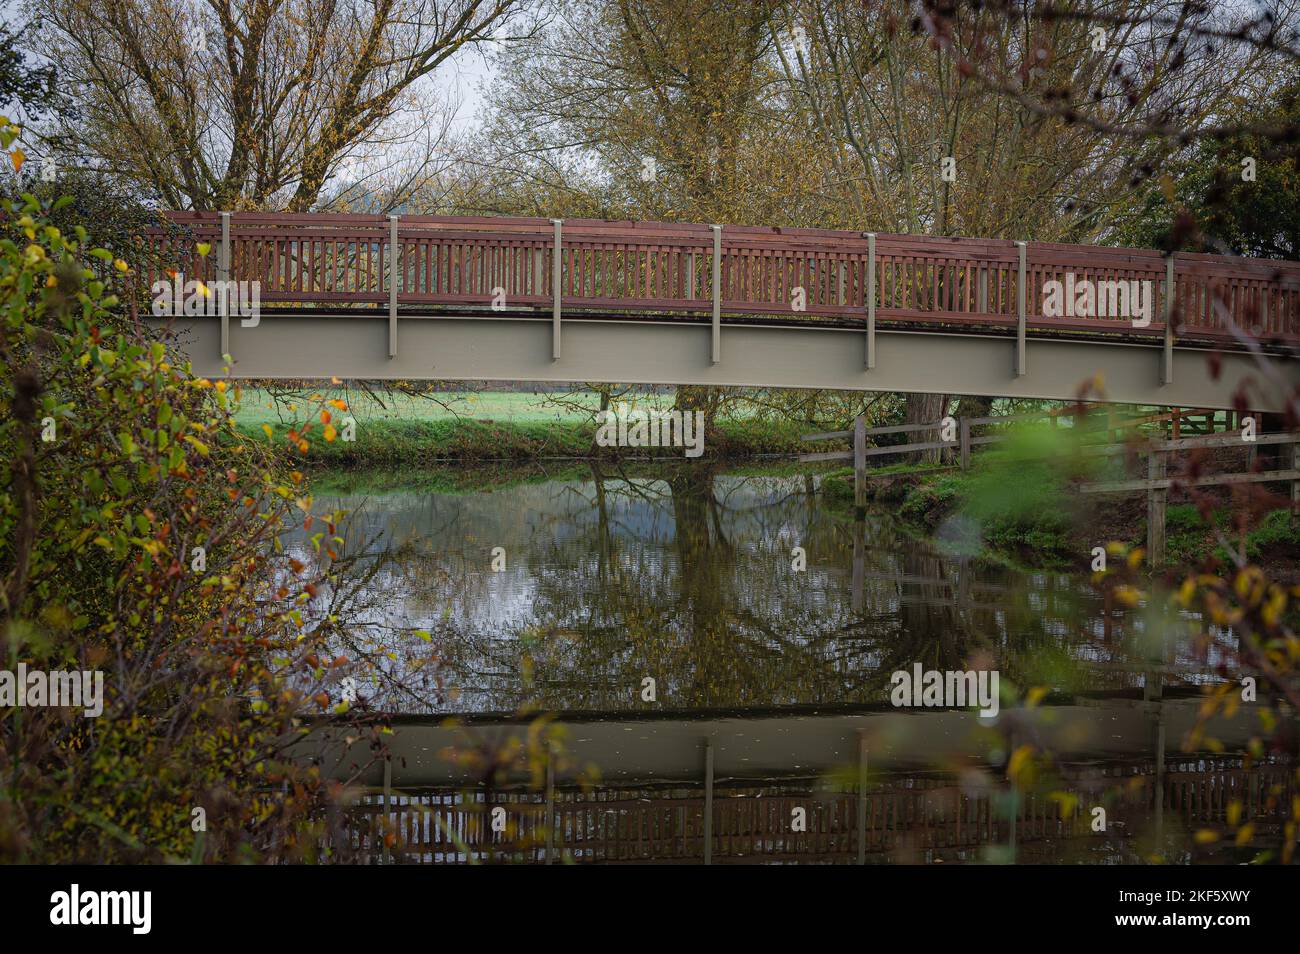 new Fen bridge in Dedham Vale. River Stour. Essex-Suffolk border. Stock Photo